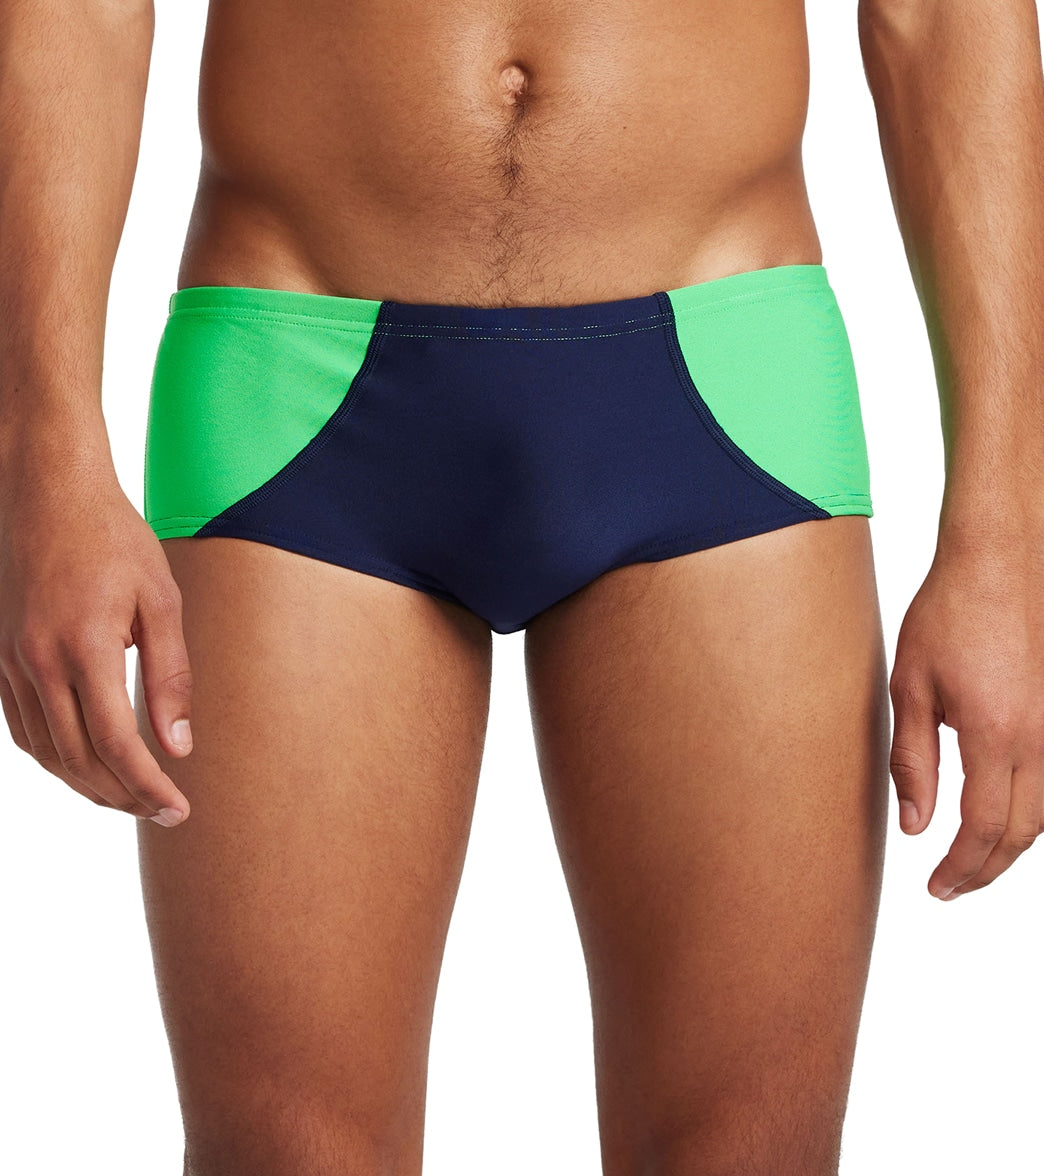 Speedo Vibe Men's Colorblock Euro Brief Swimsuit at